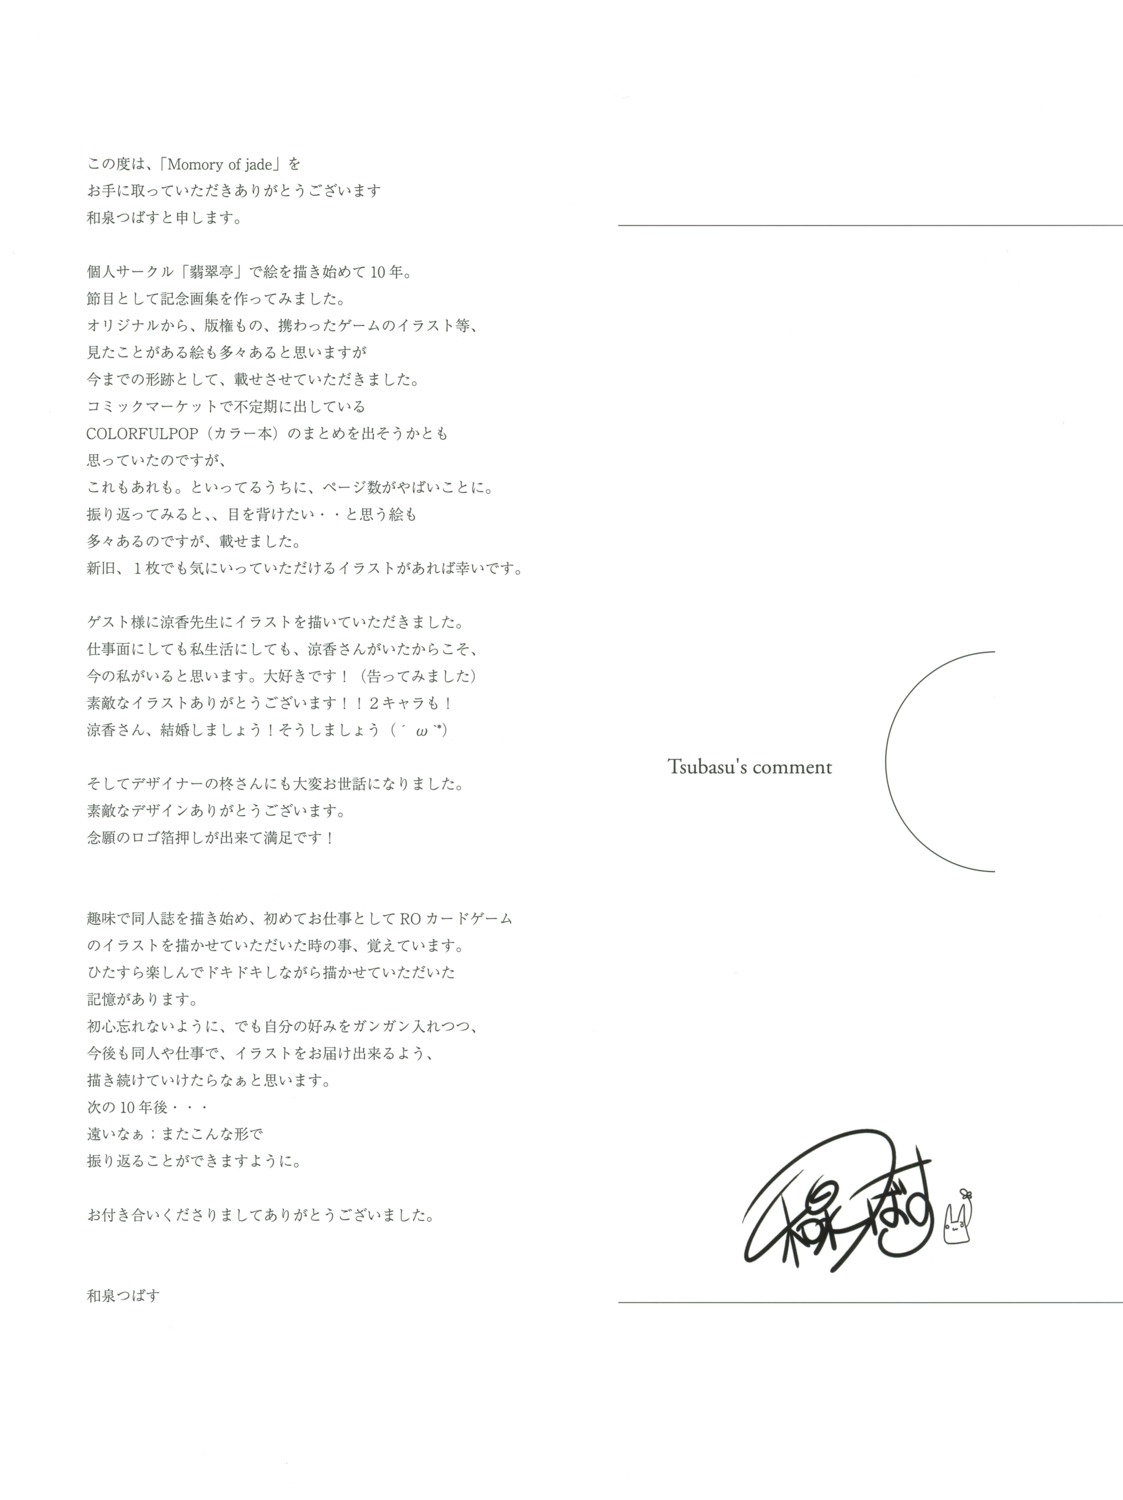 autographed hisuitei izumi_tsubasu text